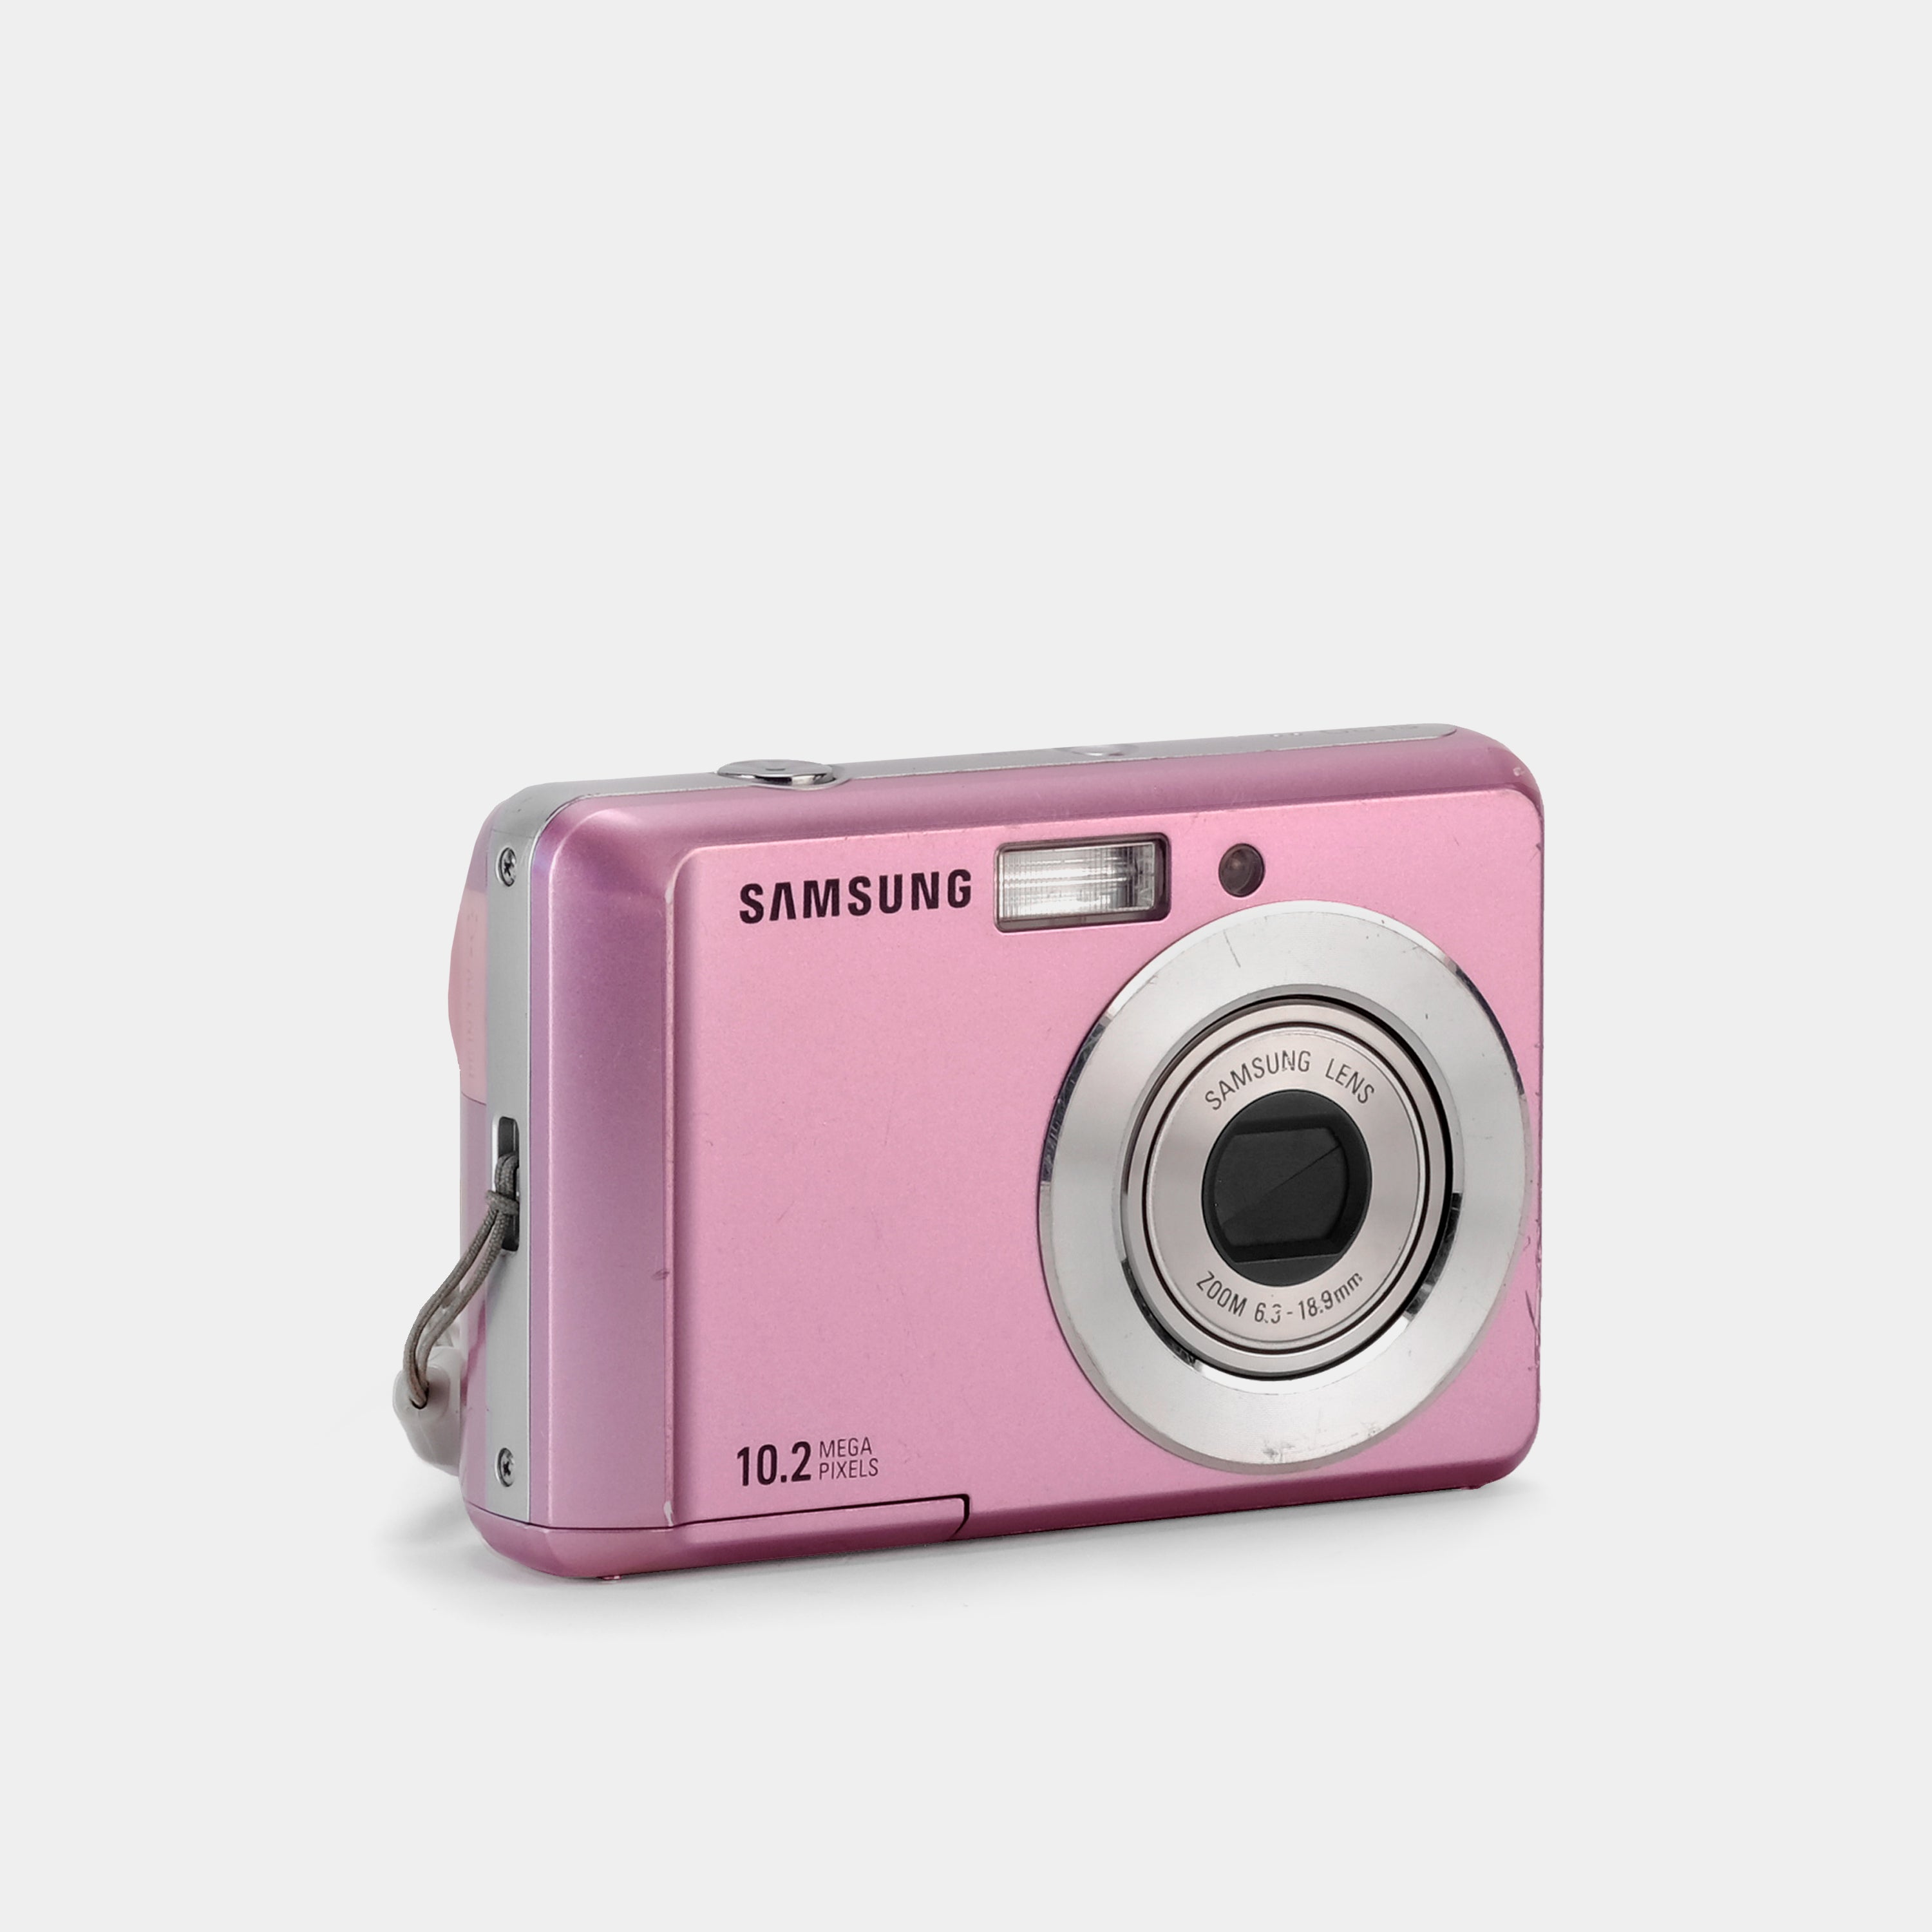 Samsung SL30 Point and Shoot Digital Camera